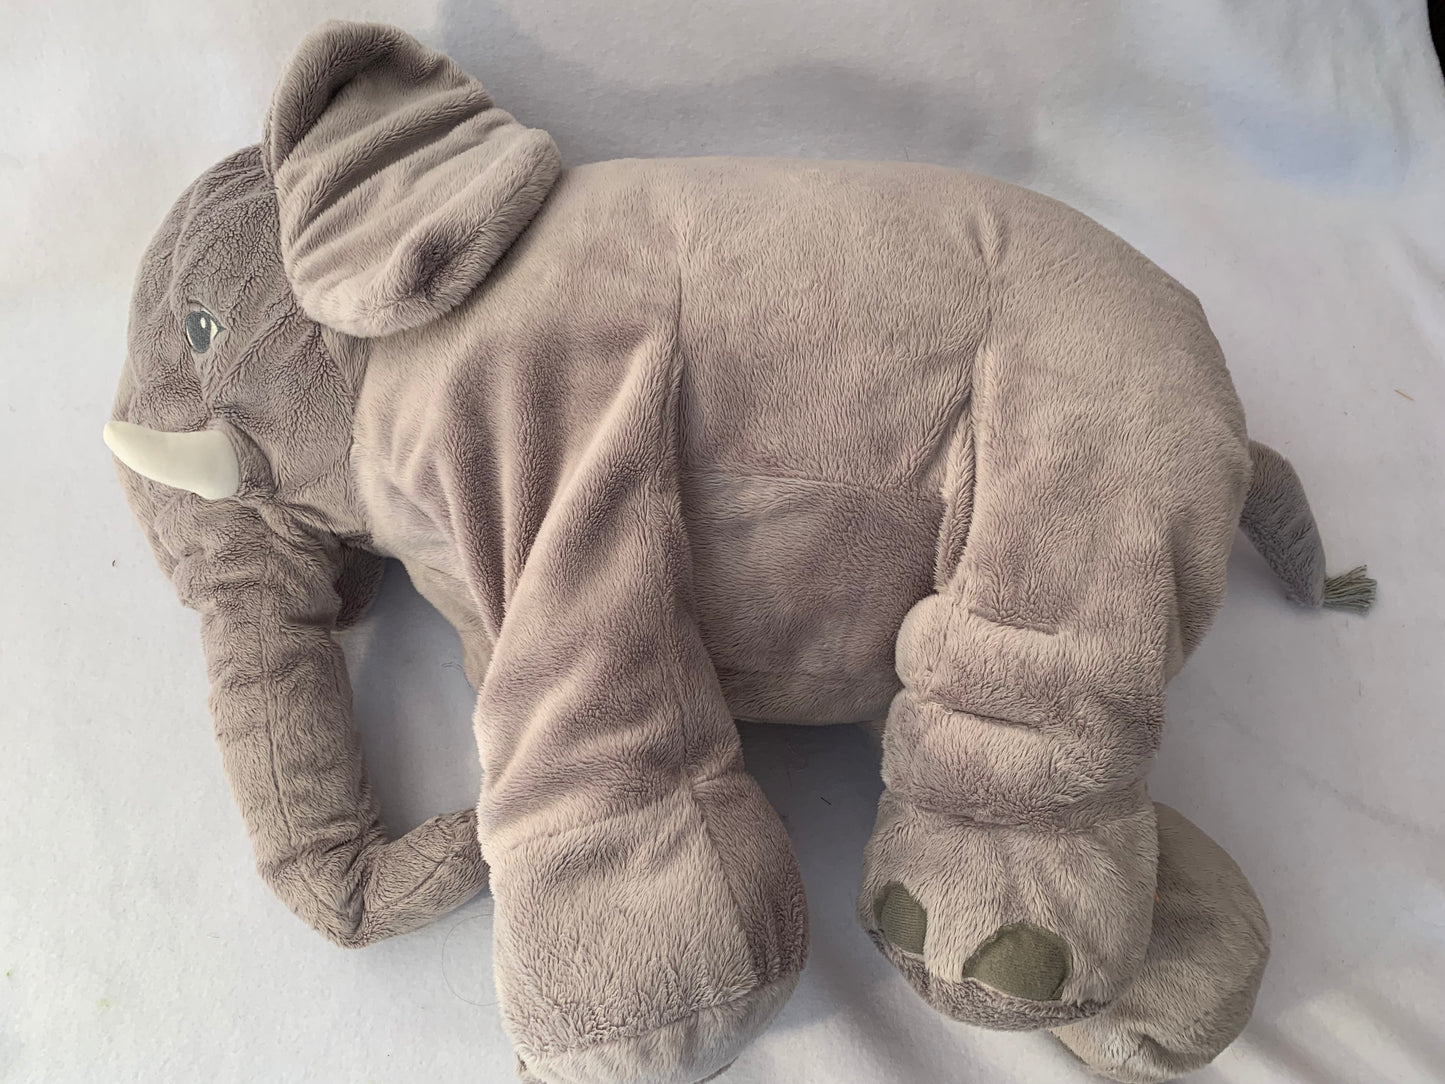 Jumbo WEIGHTED STUFFED ANIMAL, large elephant or dog sensory toy, choose 15 or 20 lbs, washable